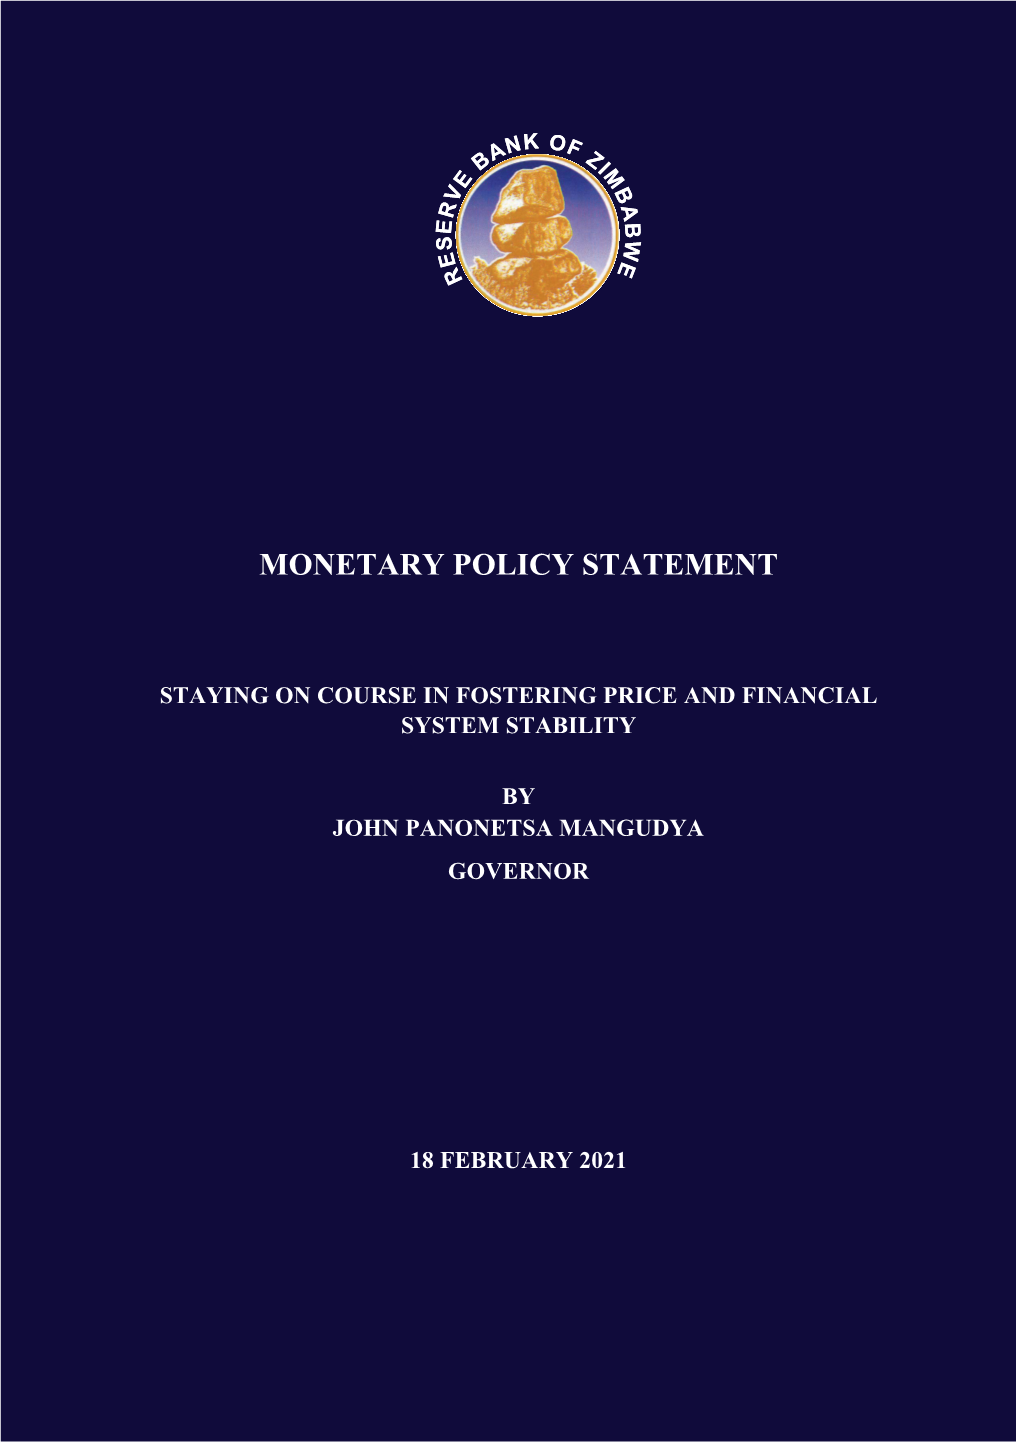 Monetary Policy Statement 18 February 2021 Final